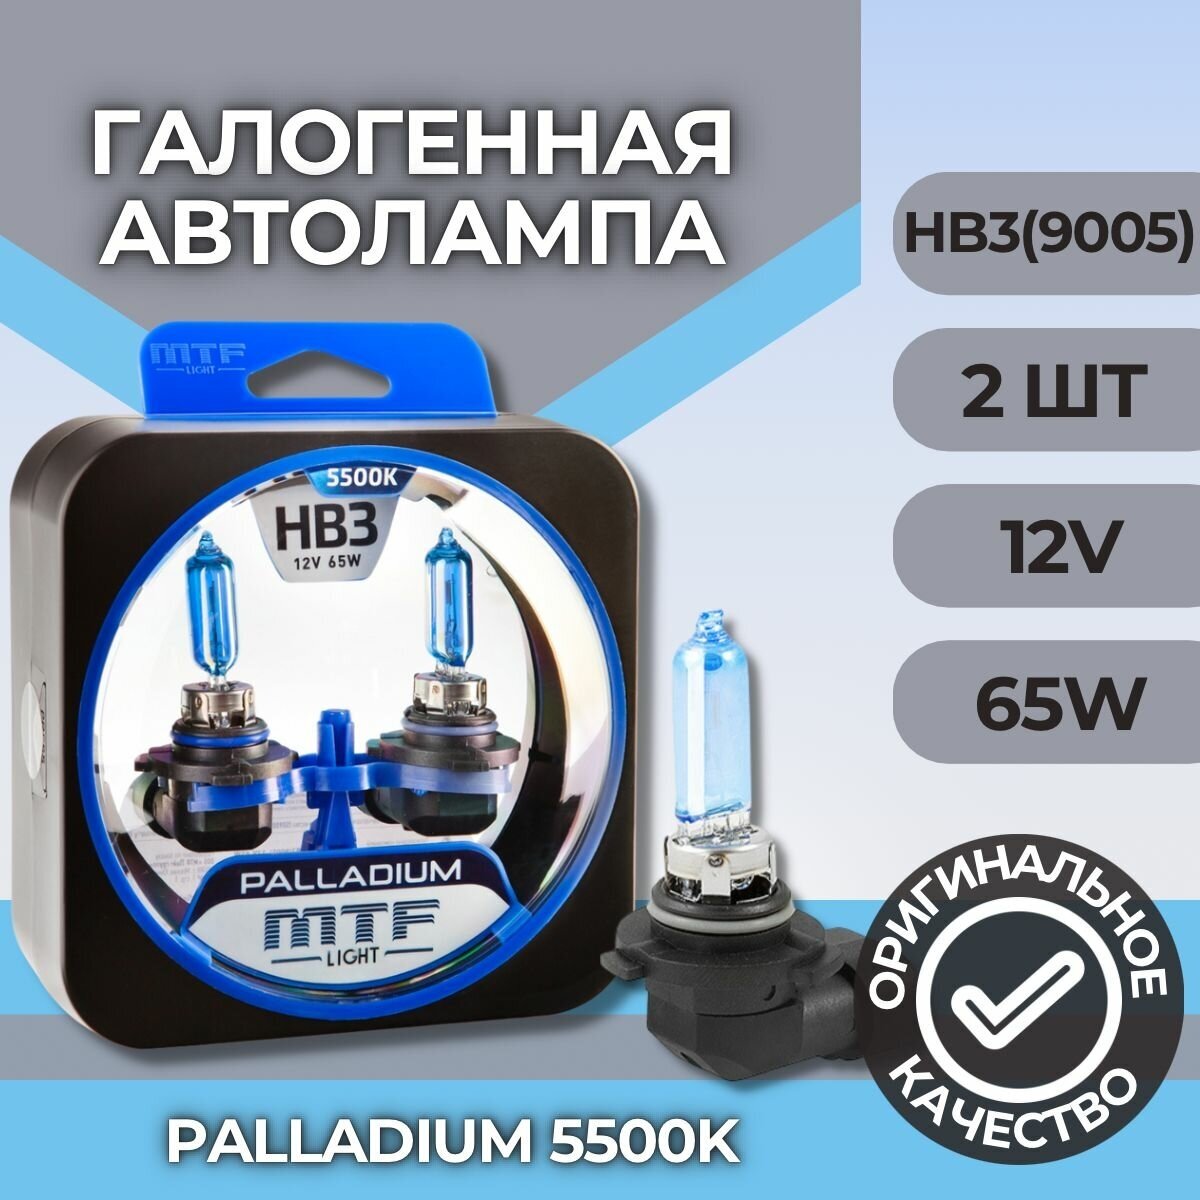 Галогеновые лампы MTF light Palladium 5500K HB3(9005)